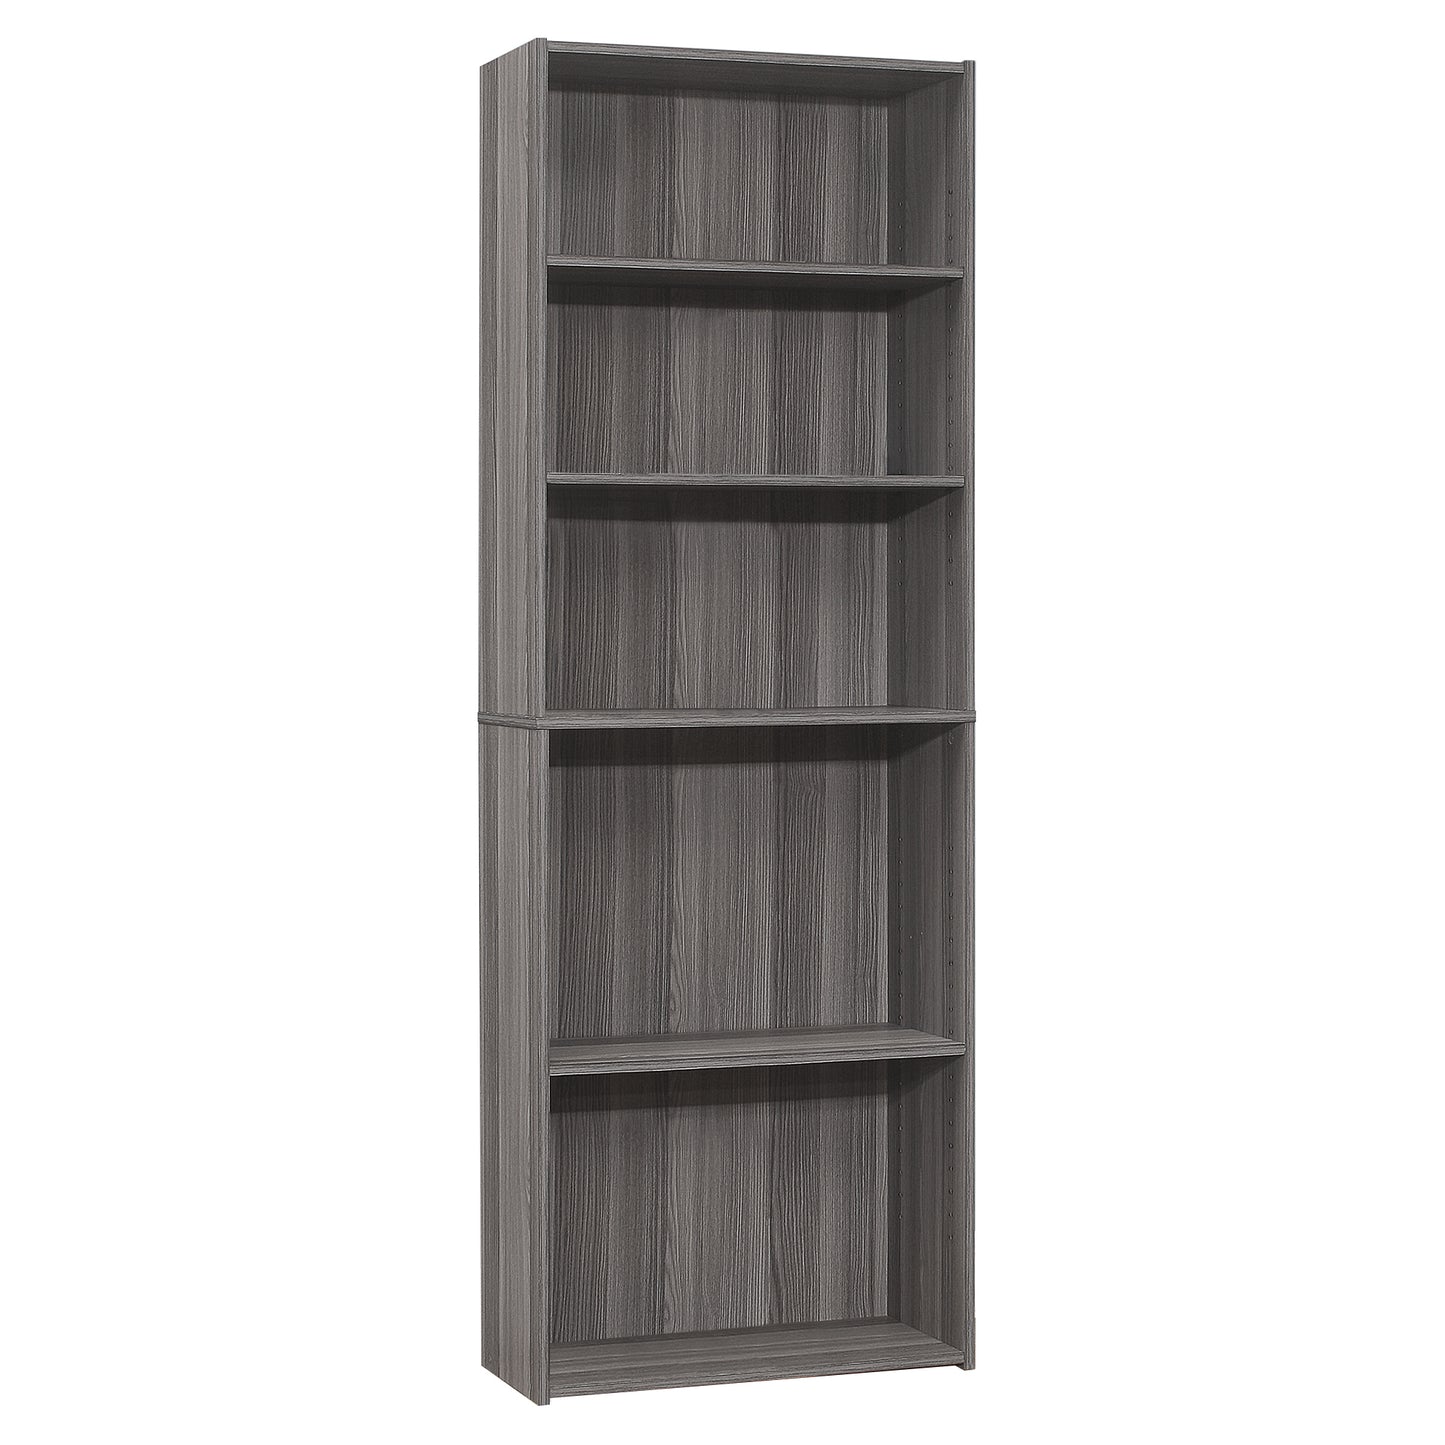 Transitional 72H 5 Shelf Bookcase in Grey Laminate Finish